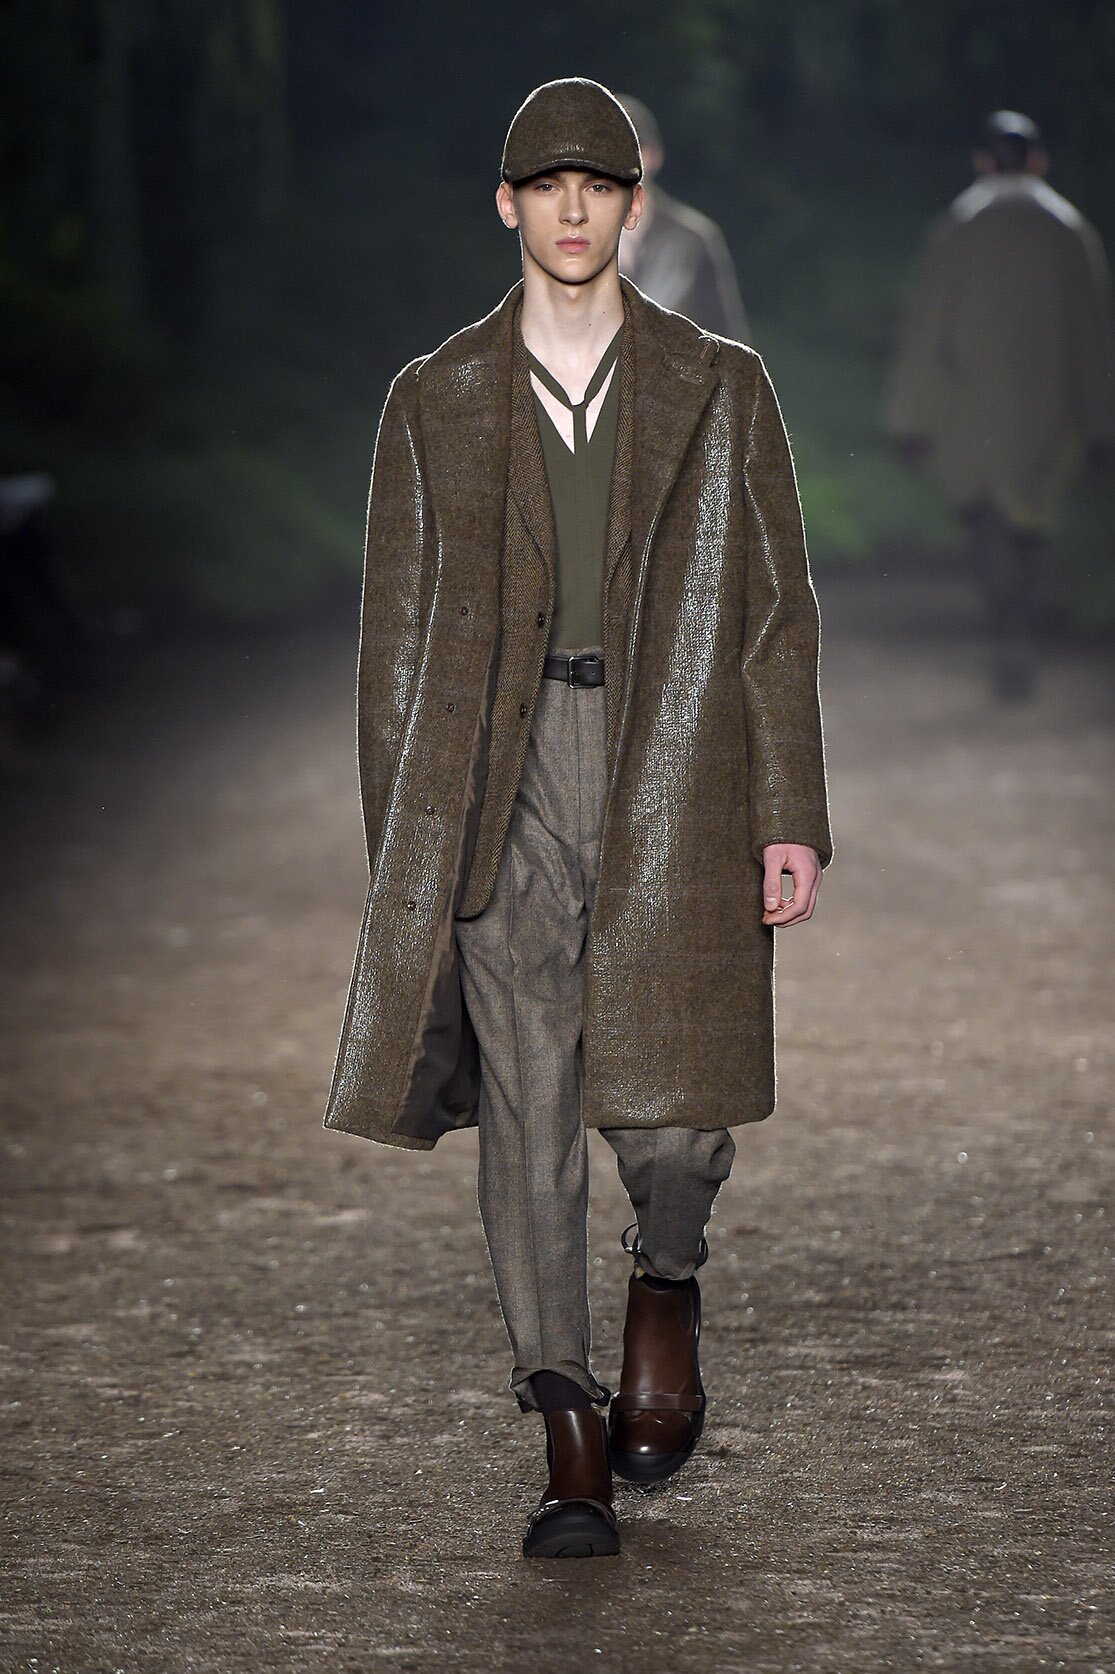 Ermenegildo Zegna Couture Fall Winter 2015 16 Men's Collection Milan Fashion Week Fashion Show